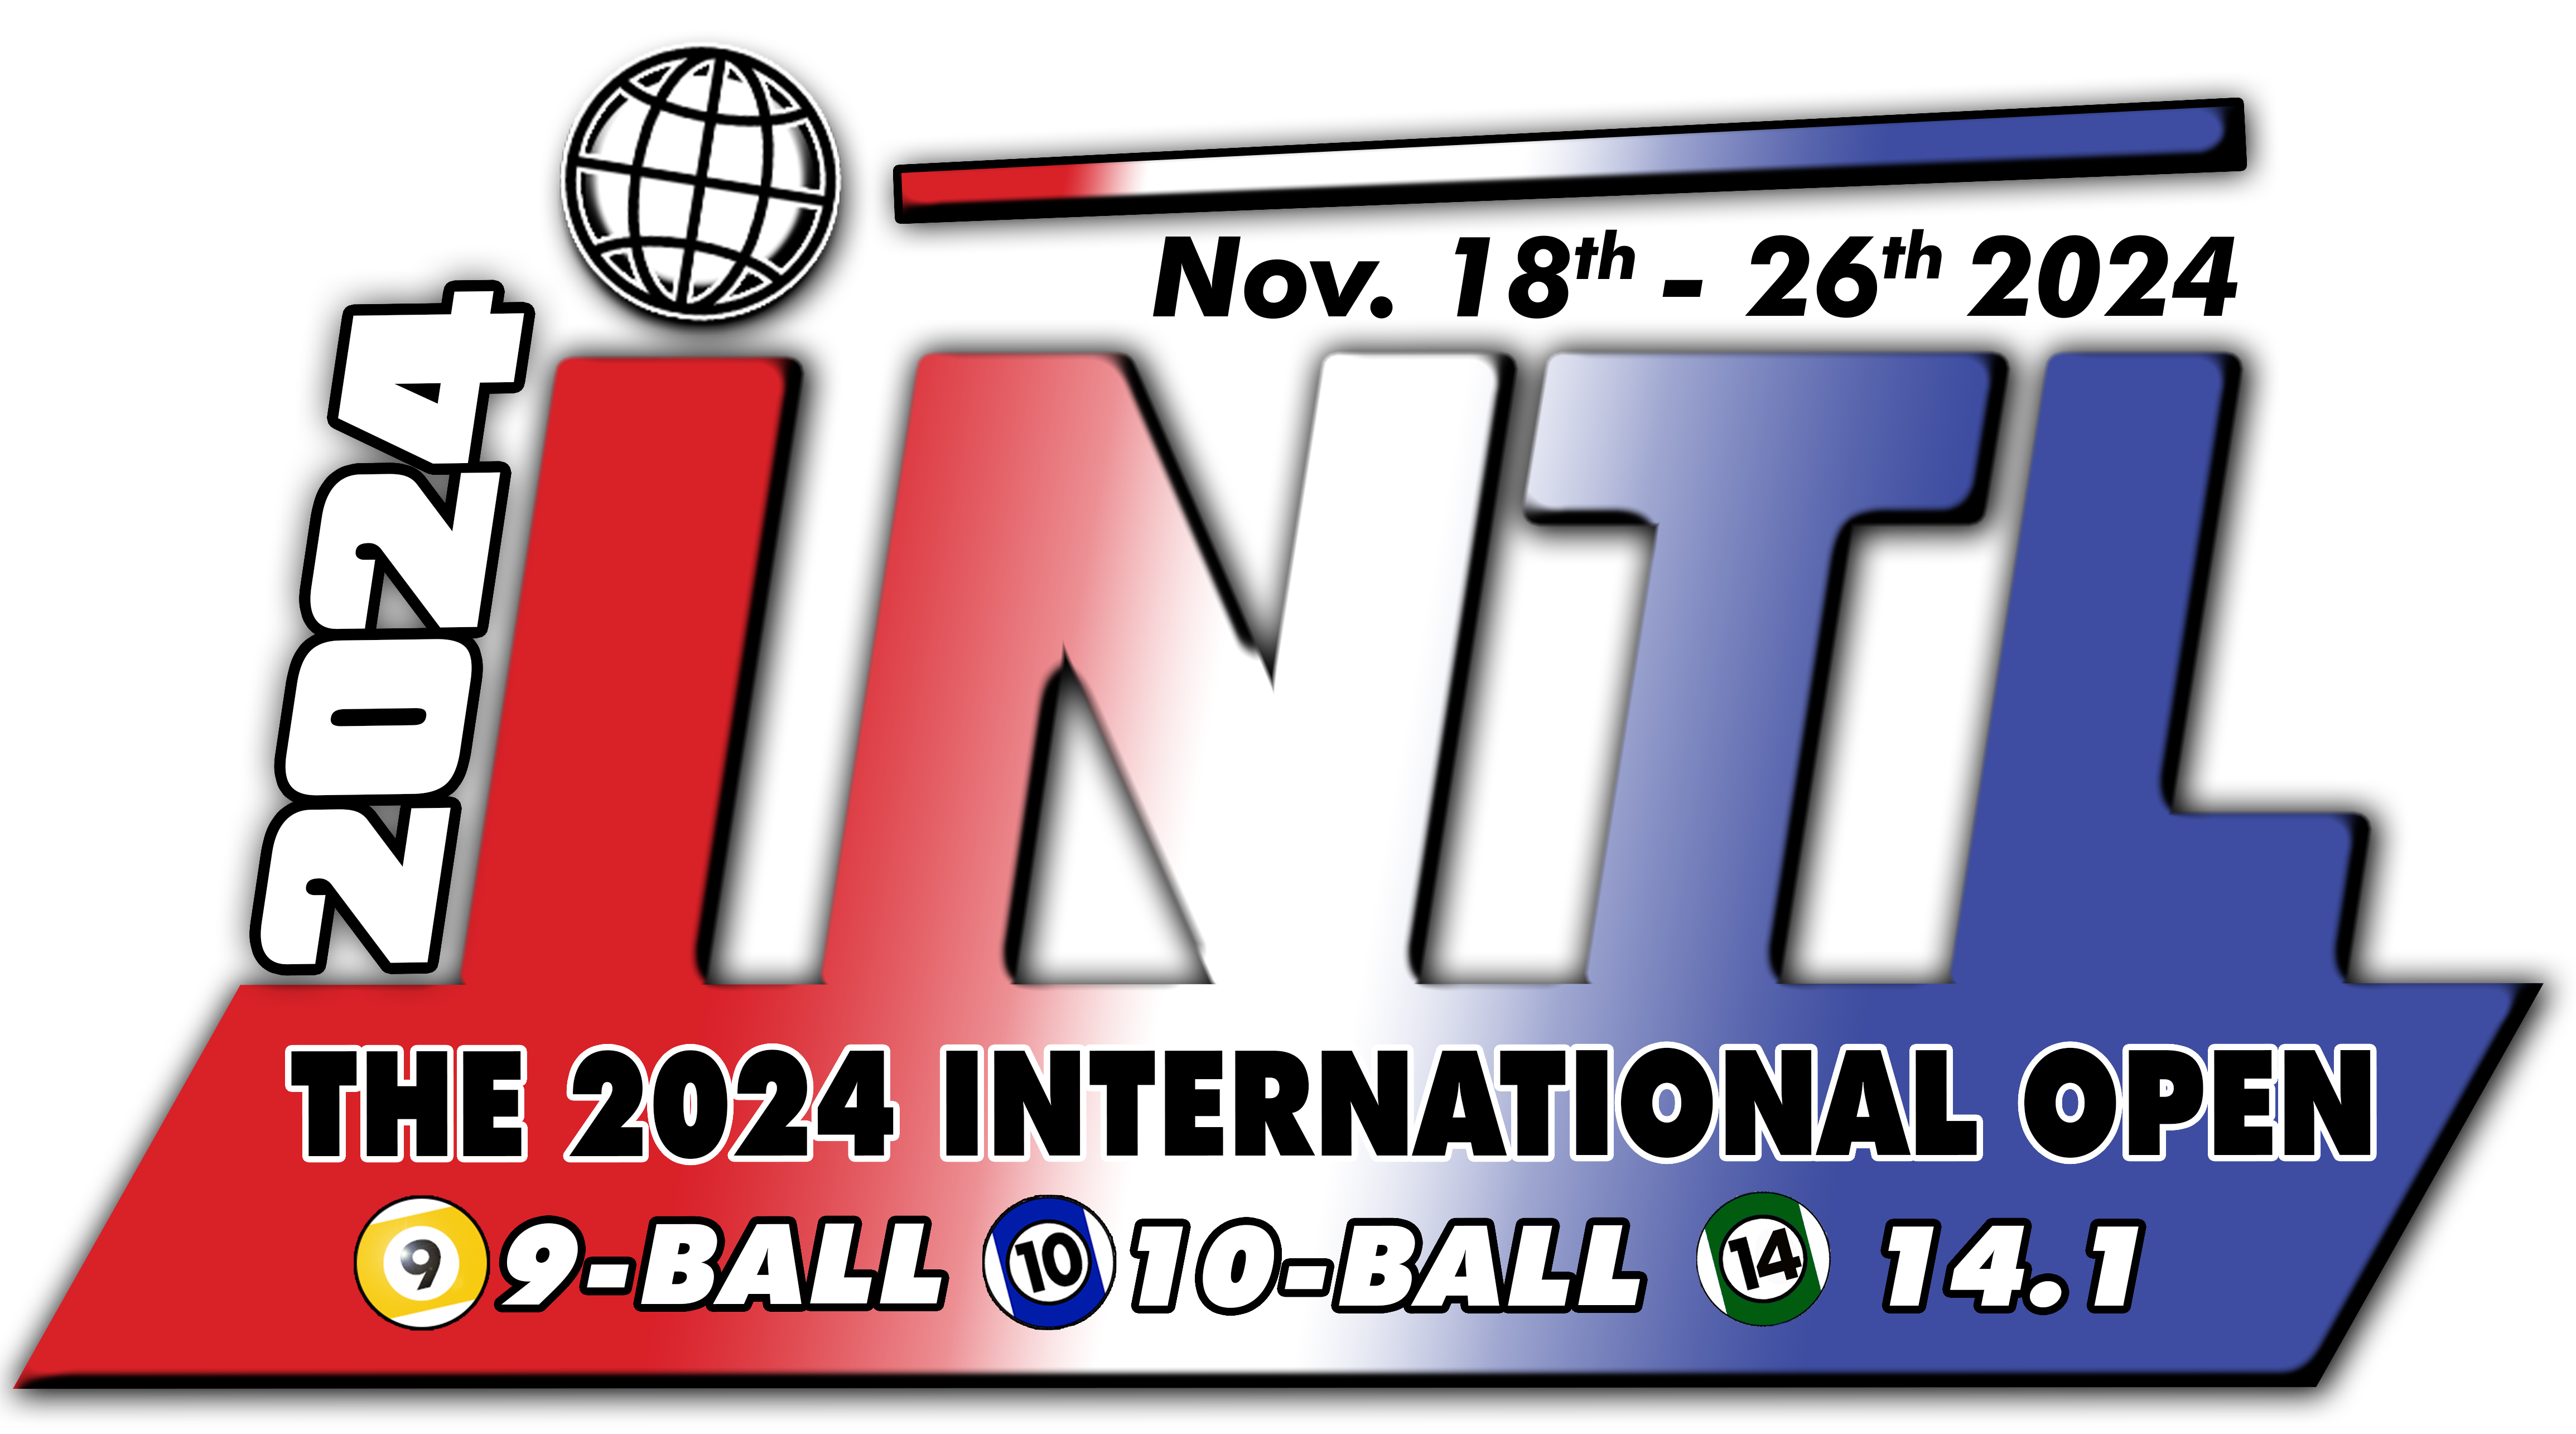 The 2022 International Open